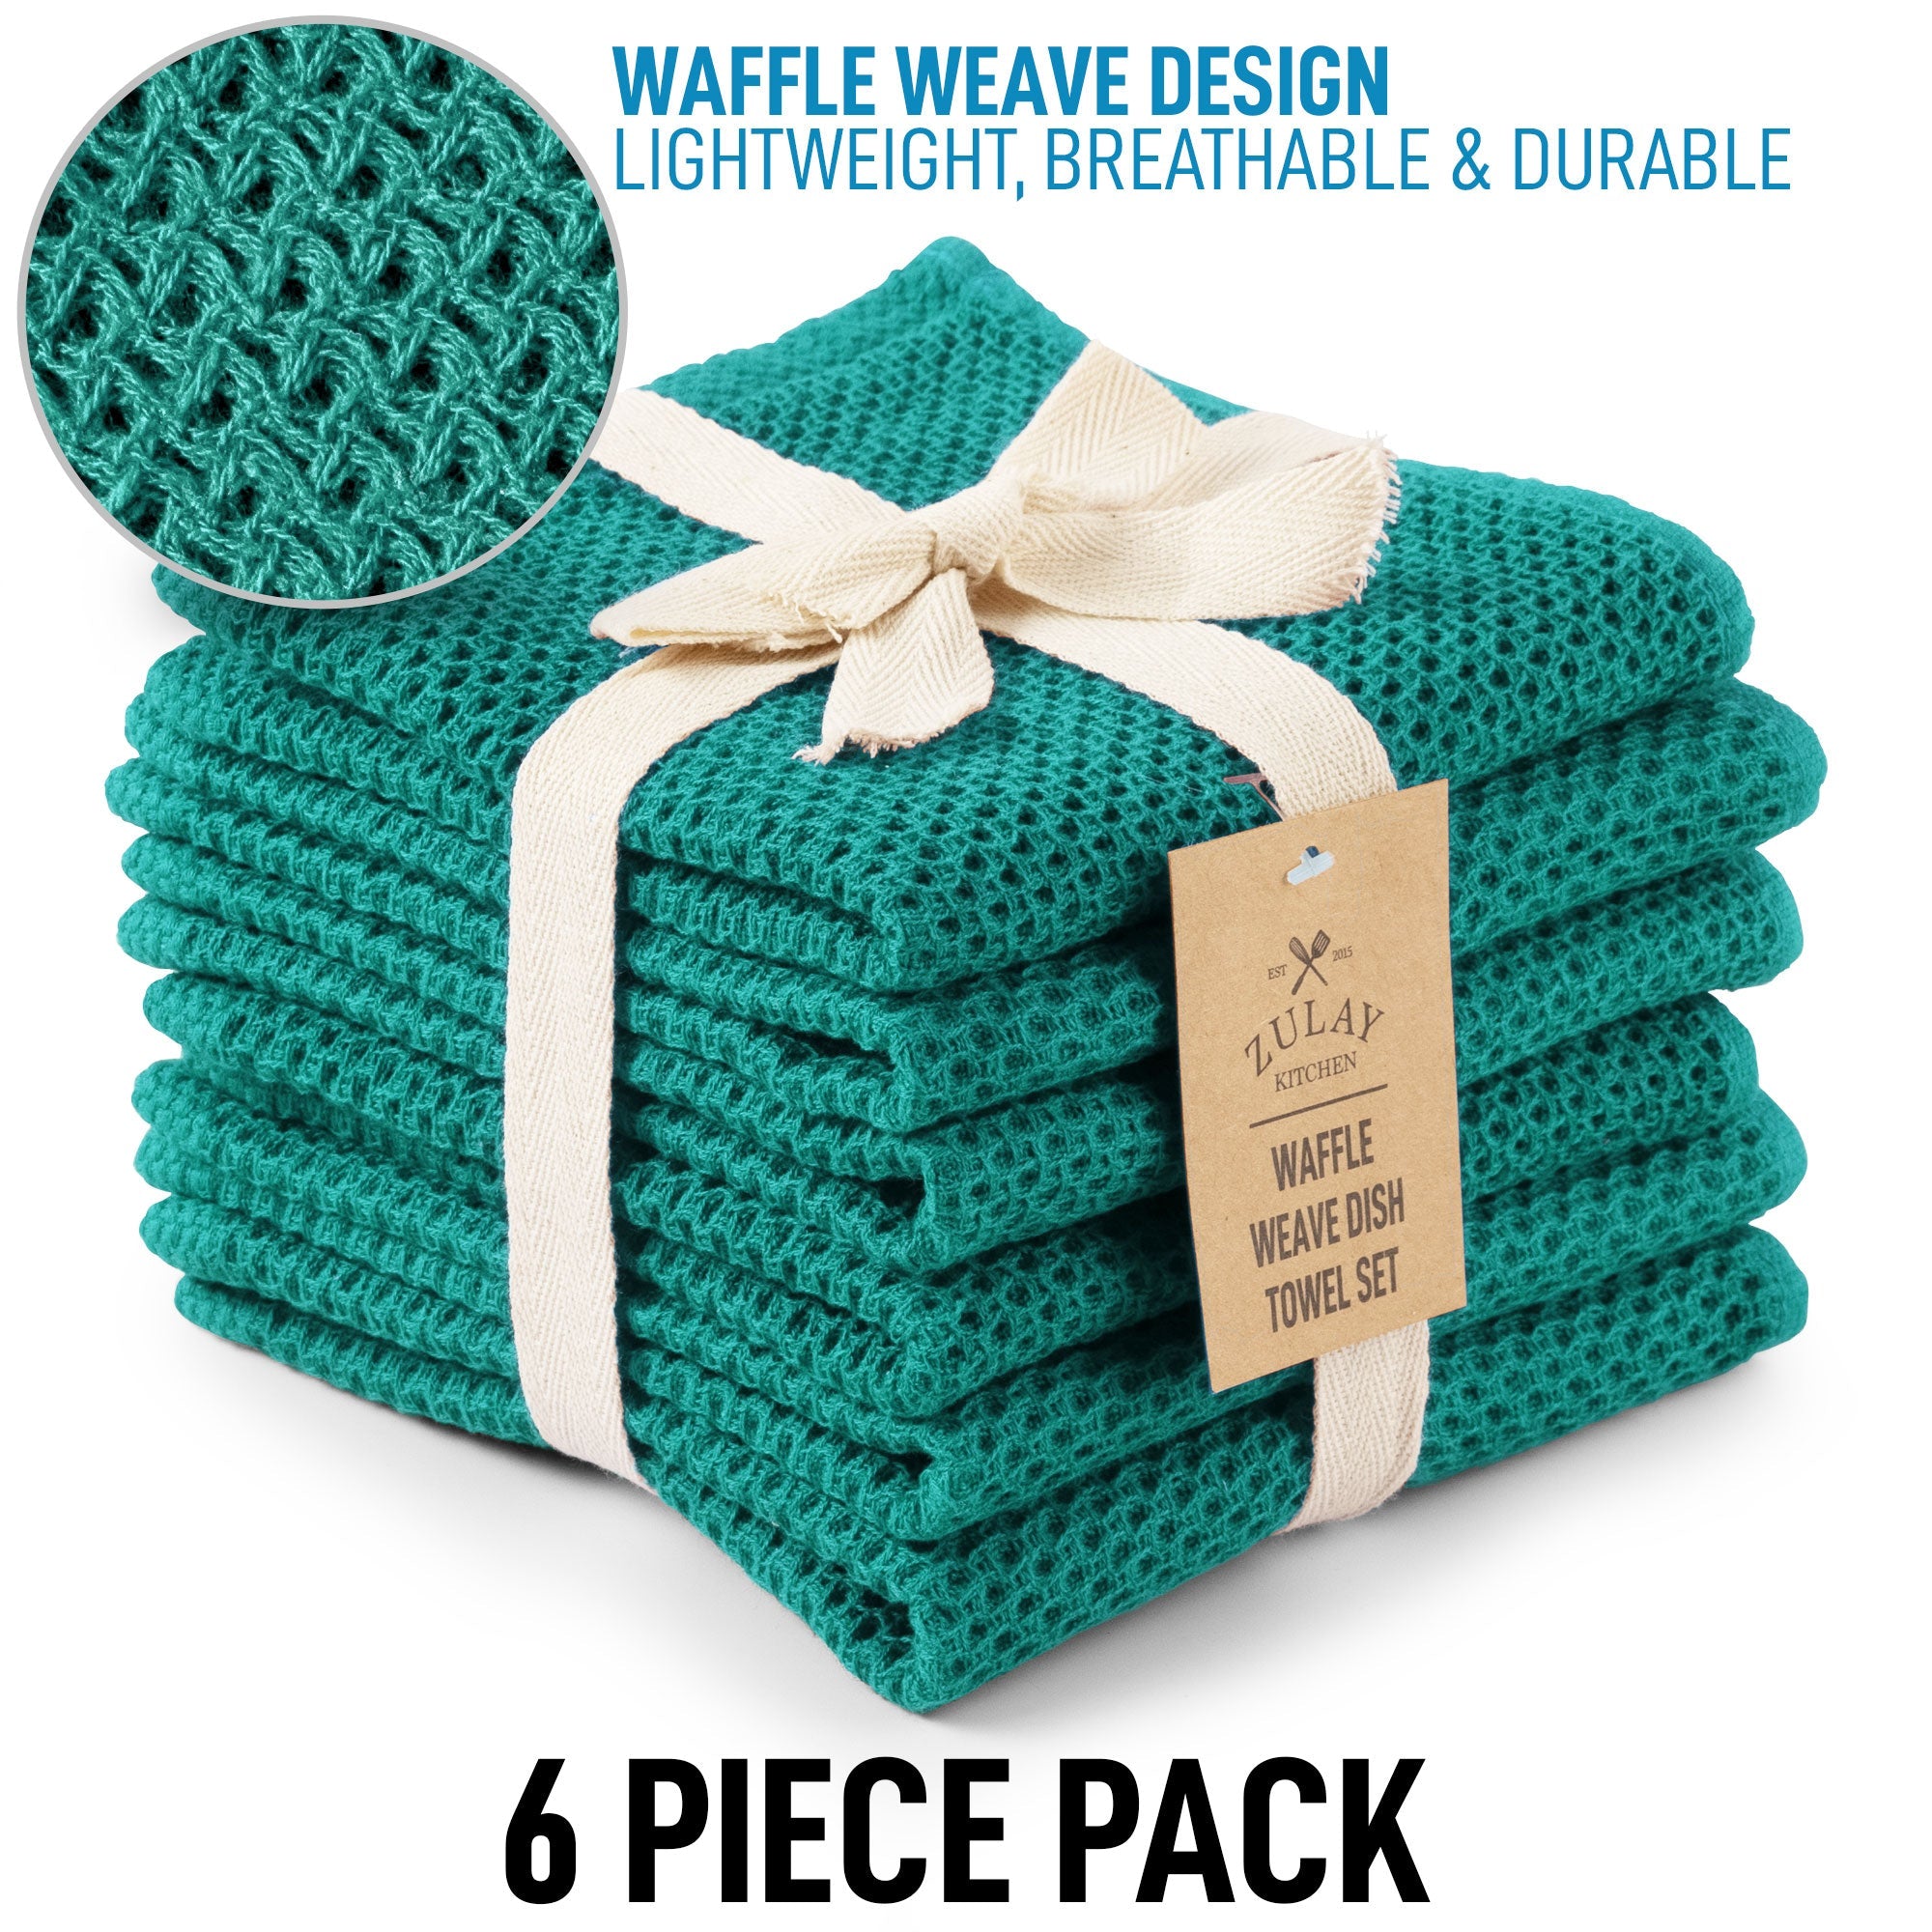 Tag Waffle Weave Dish Towel Teal